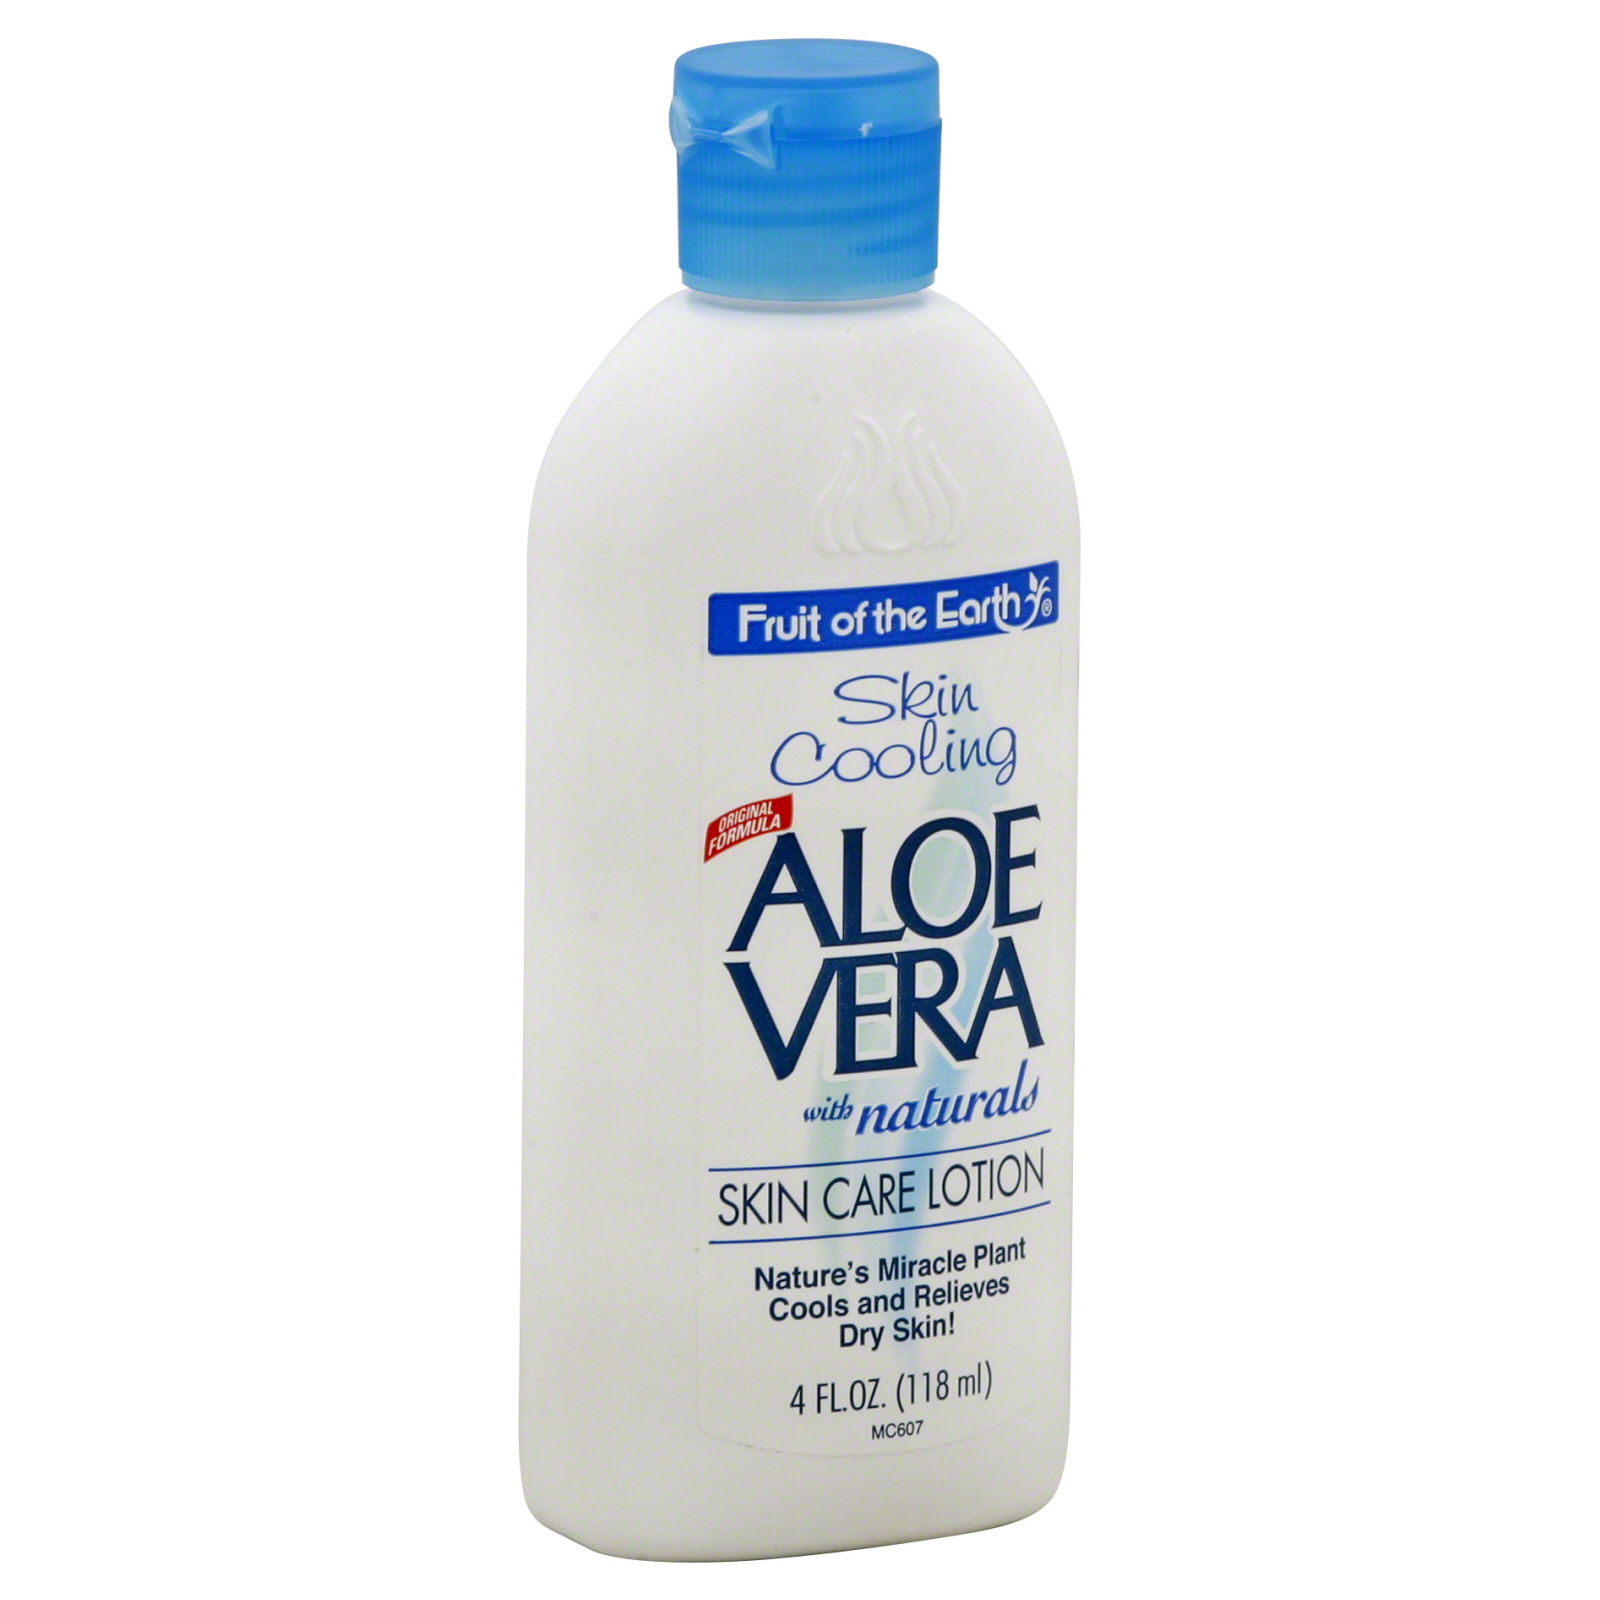 fruit of the earth skin care lotion  aloe vera  skin cooling  4 fl oz  118 ml